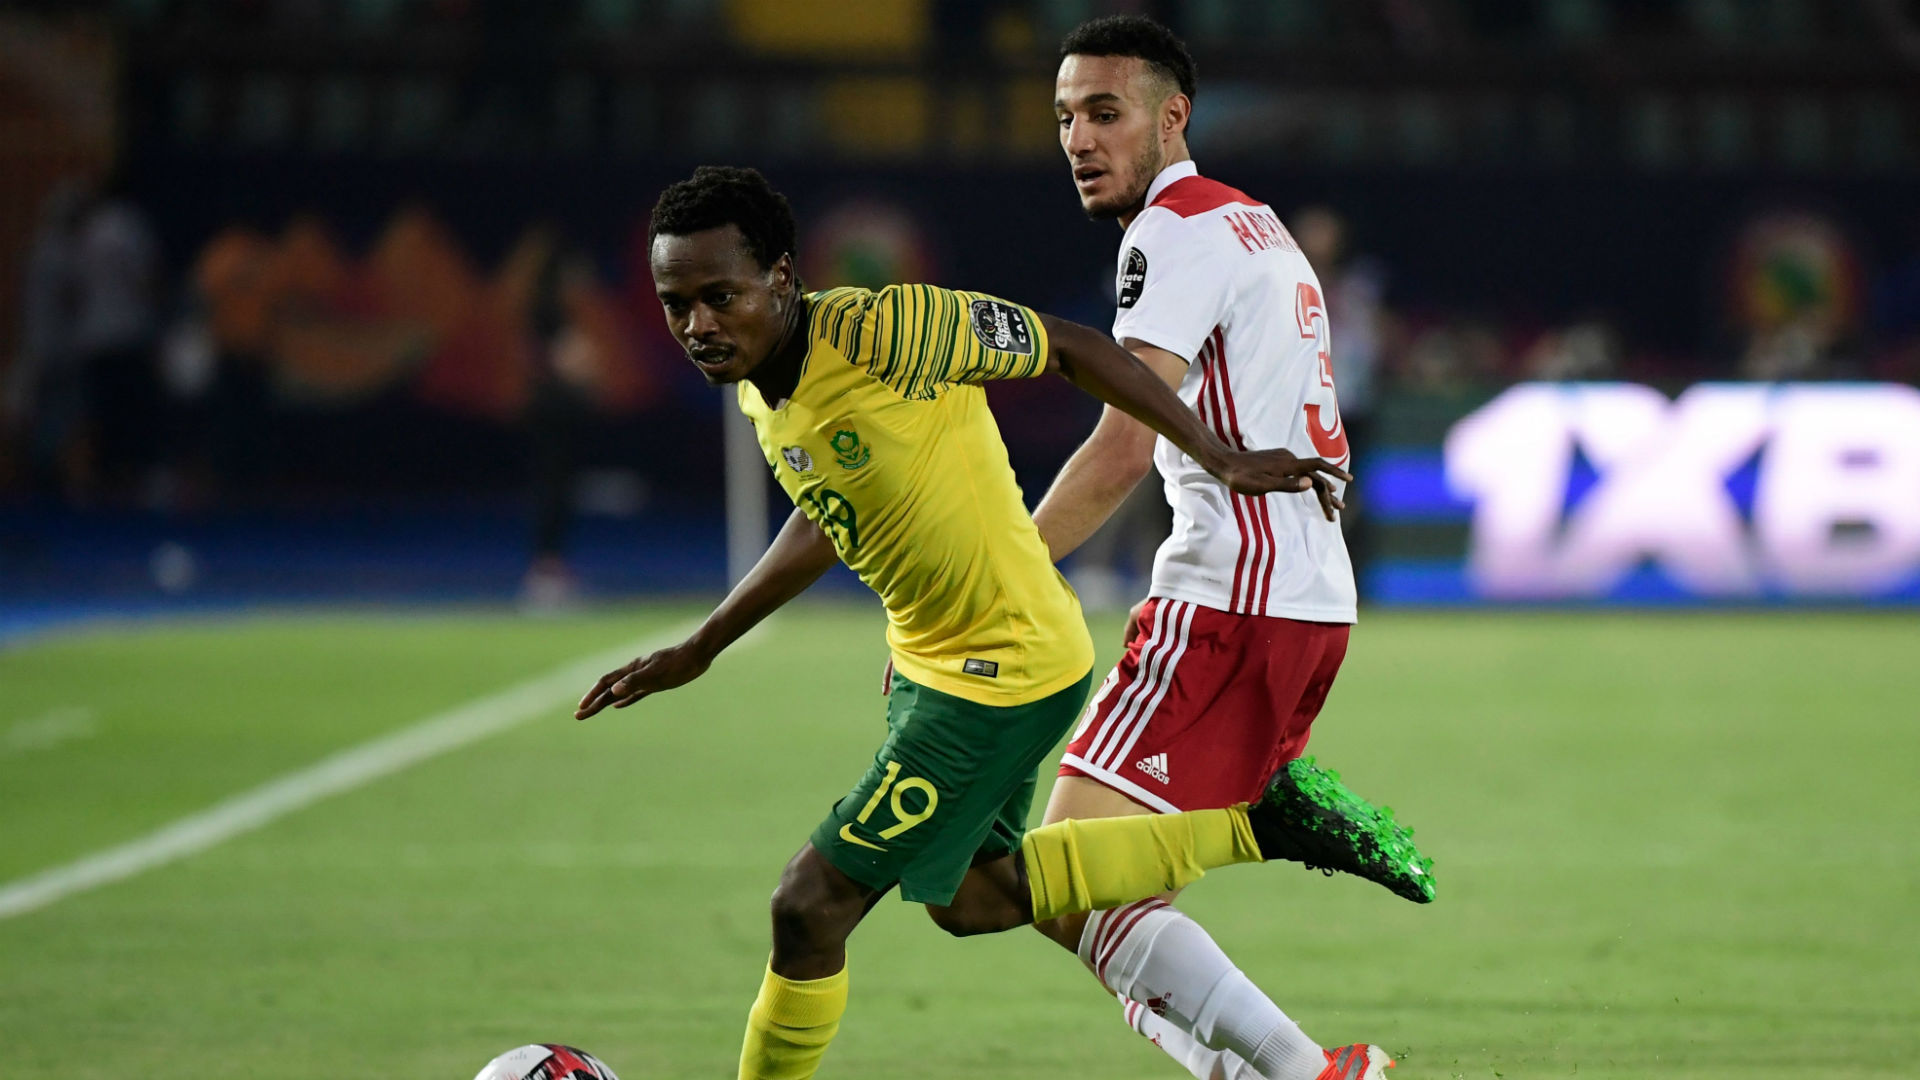 BREAKING NEWS: Mali win helps desperate Bafana Bafana reach Afcon 2019's Round of 16